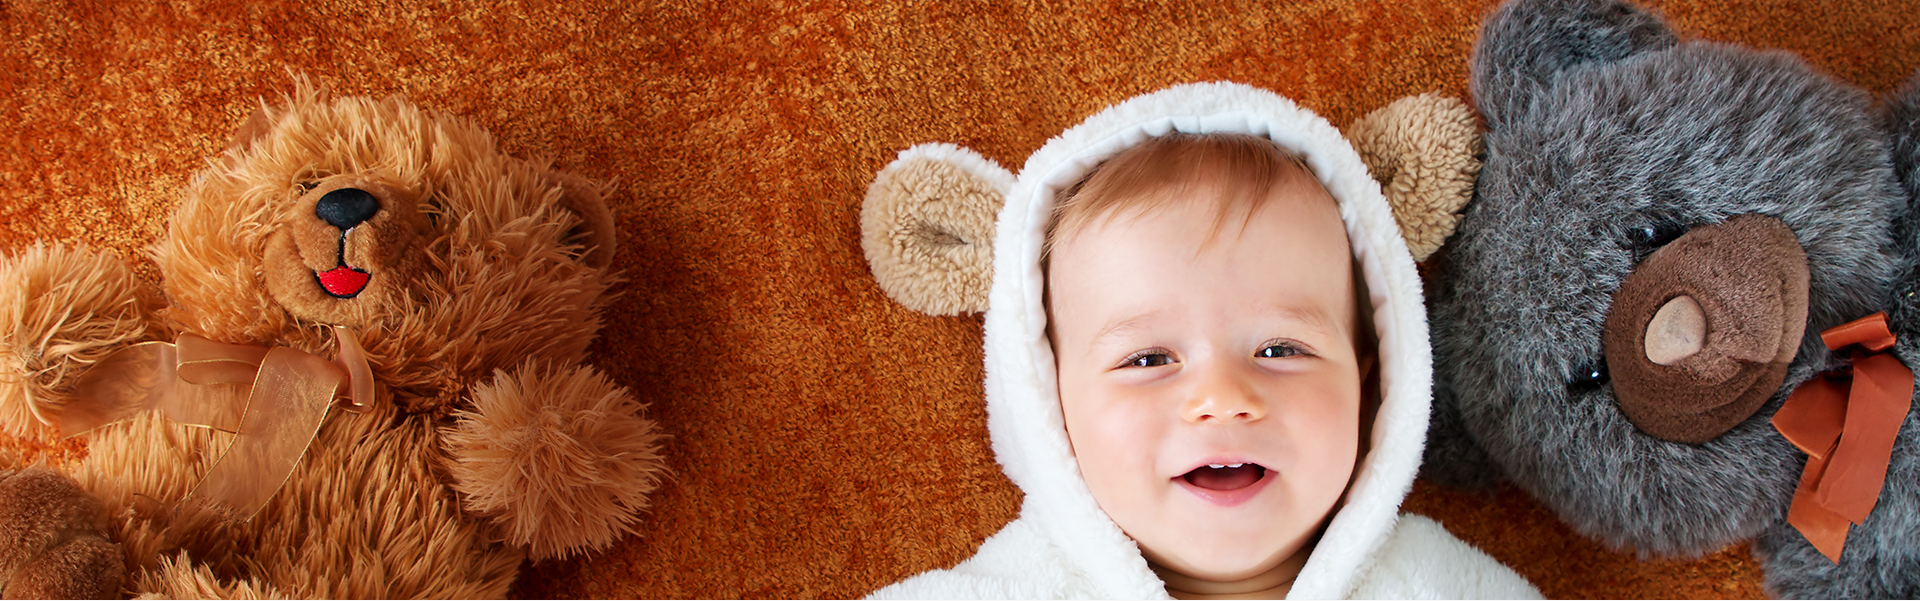 Babino sorridente con orsi - slide3